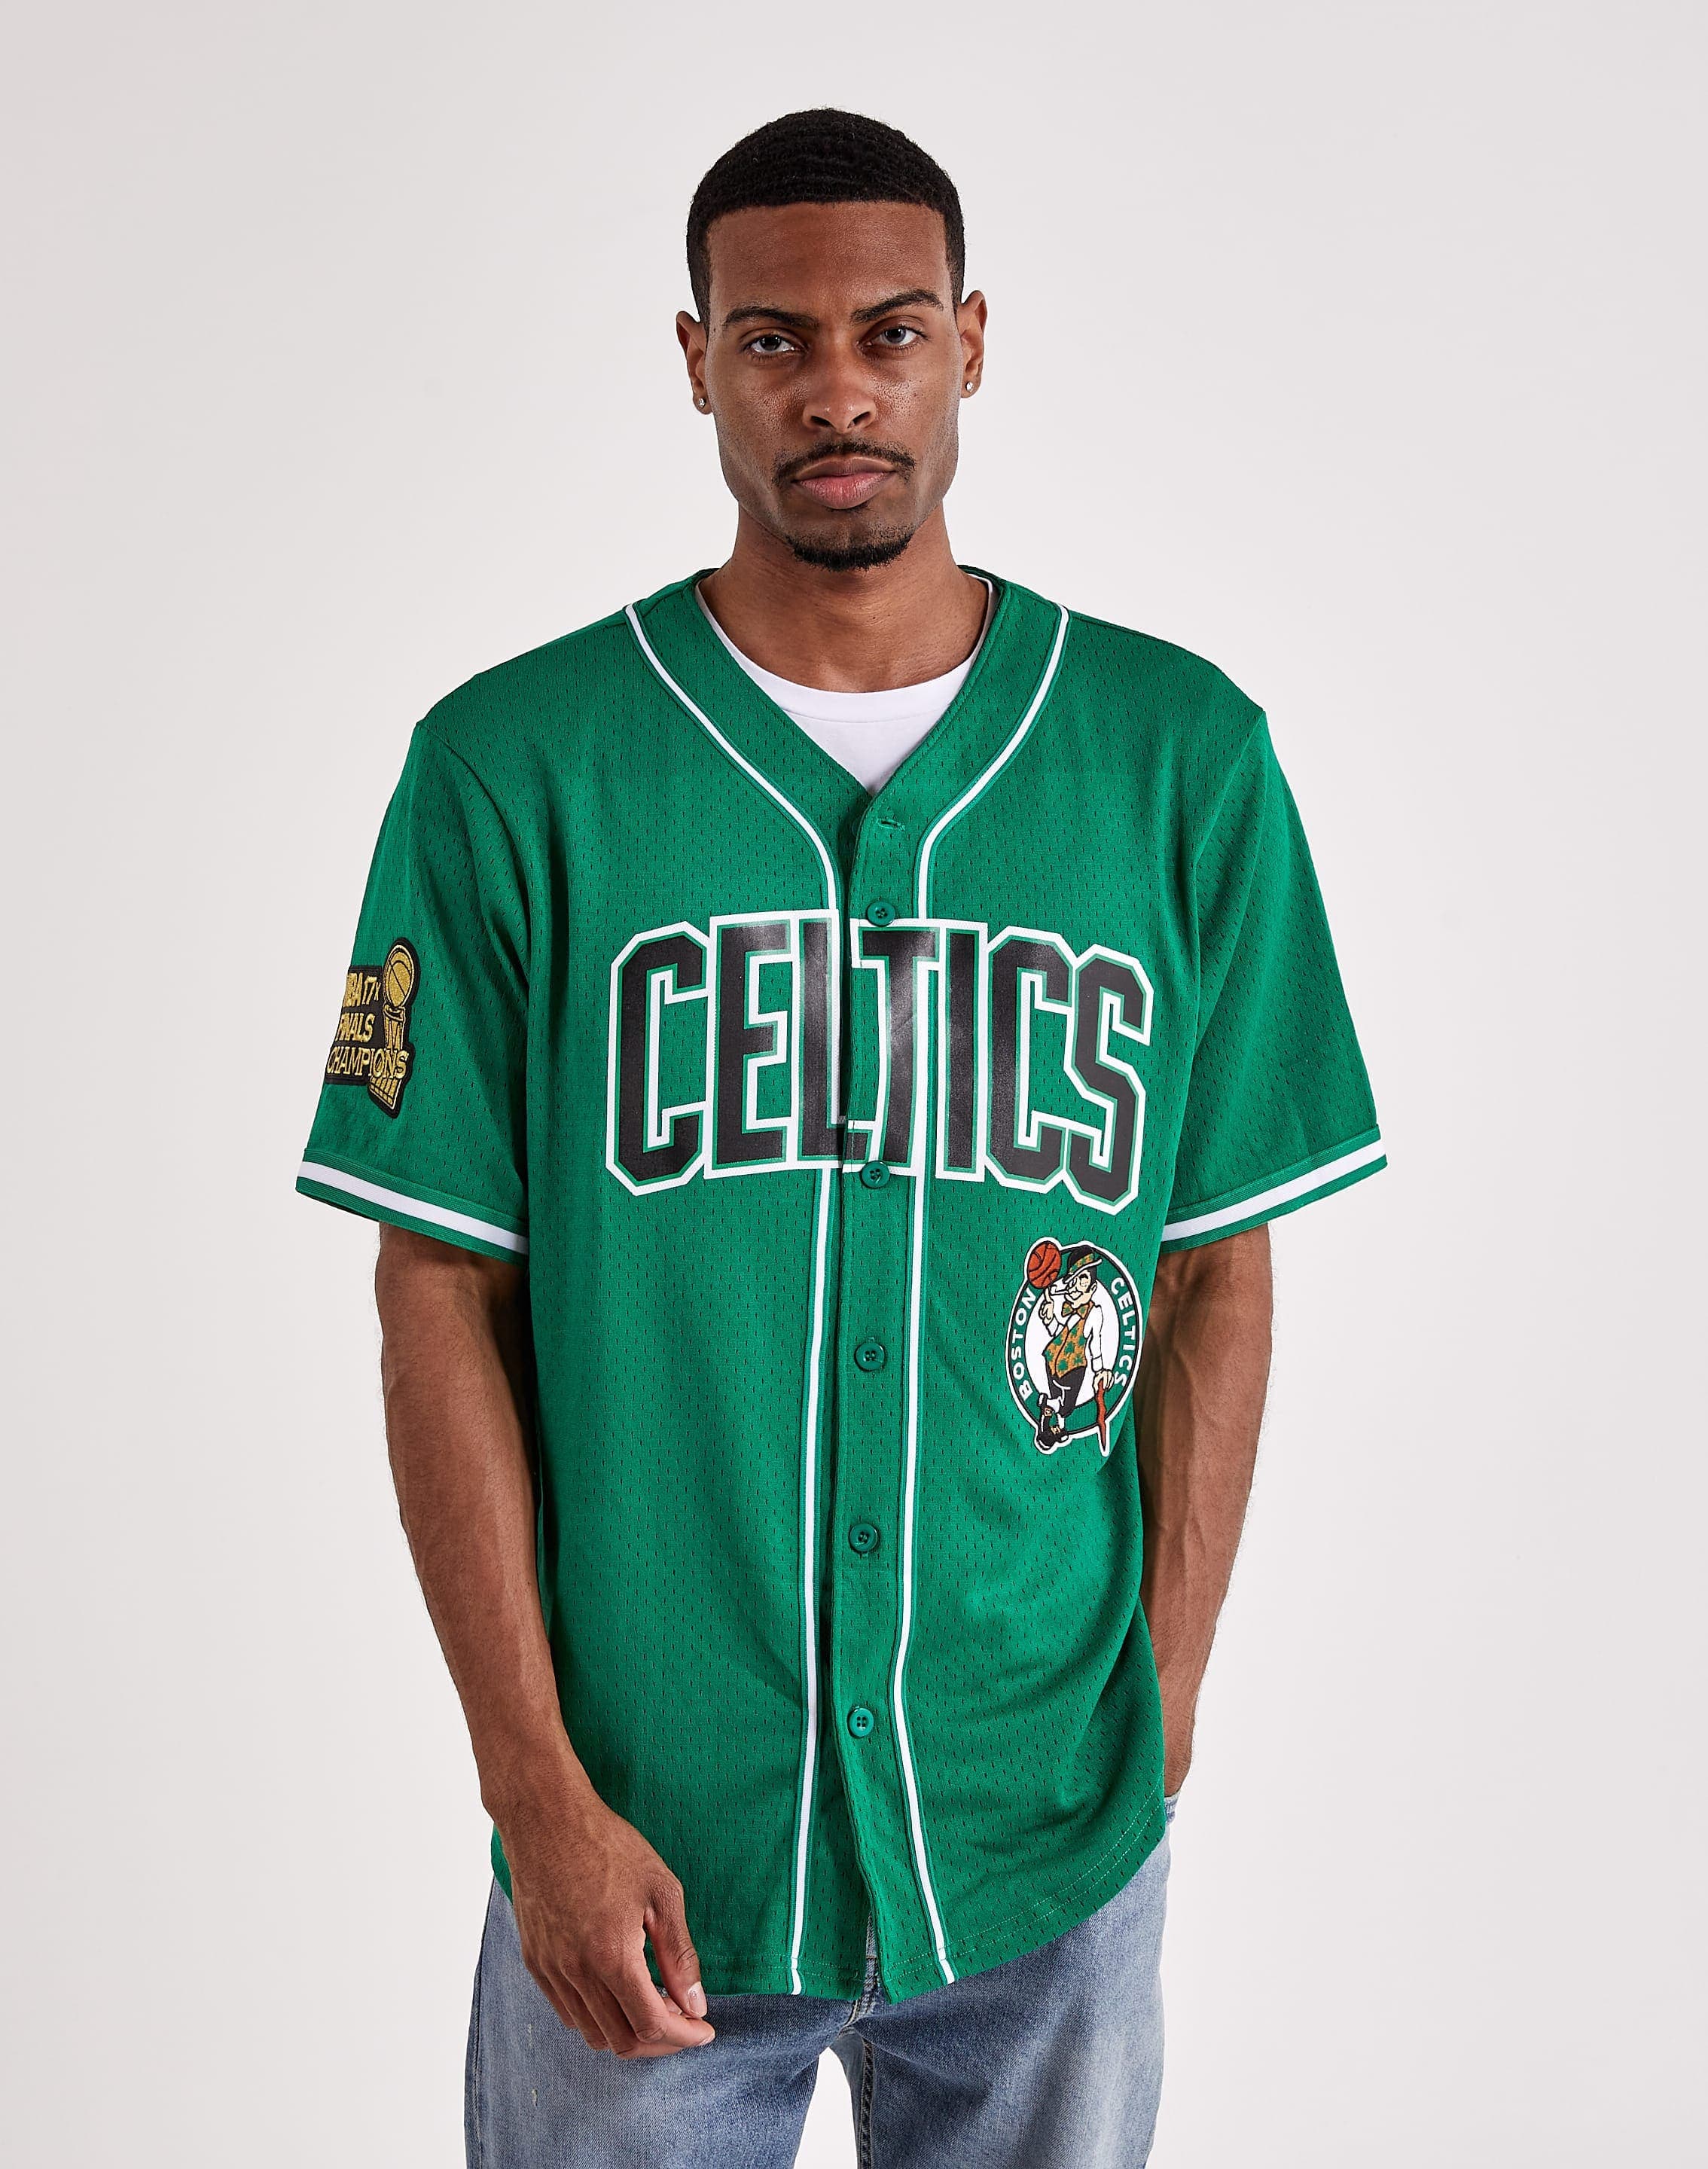 boston celtics logo basketball Kids T-Shirt for Sale by